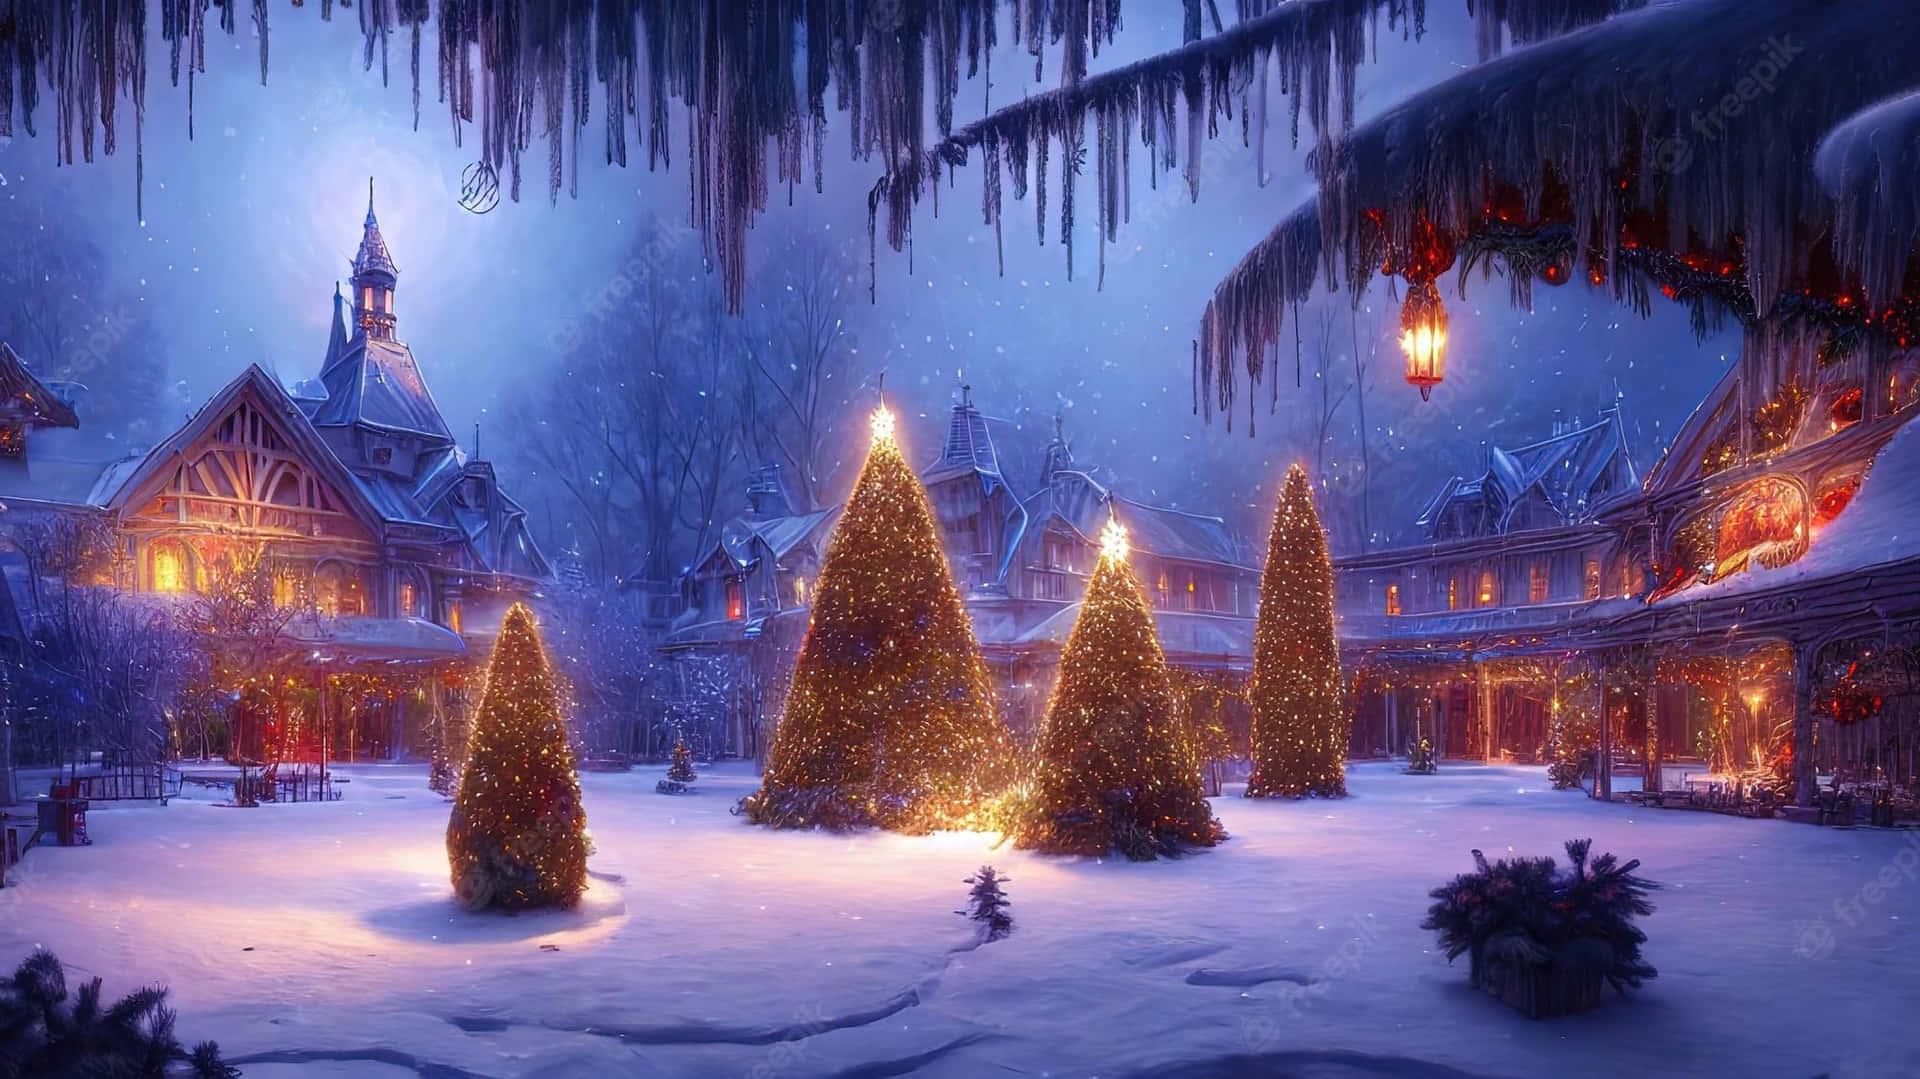  Christmas Village Backgrounds